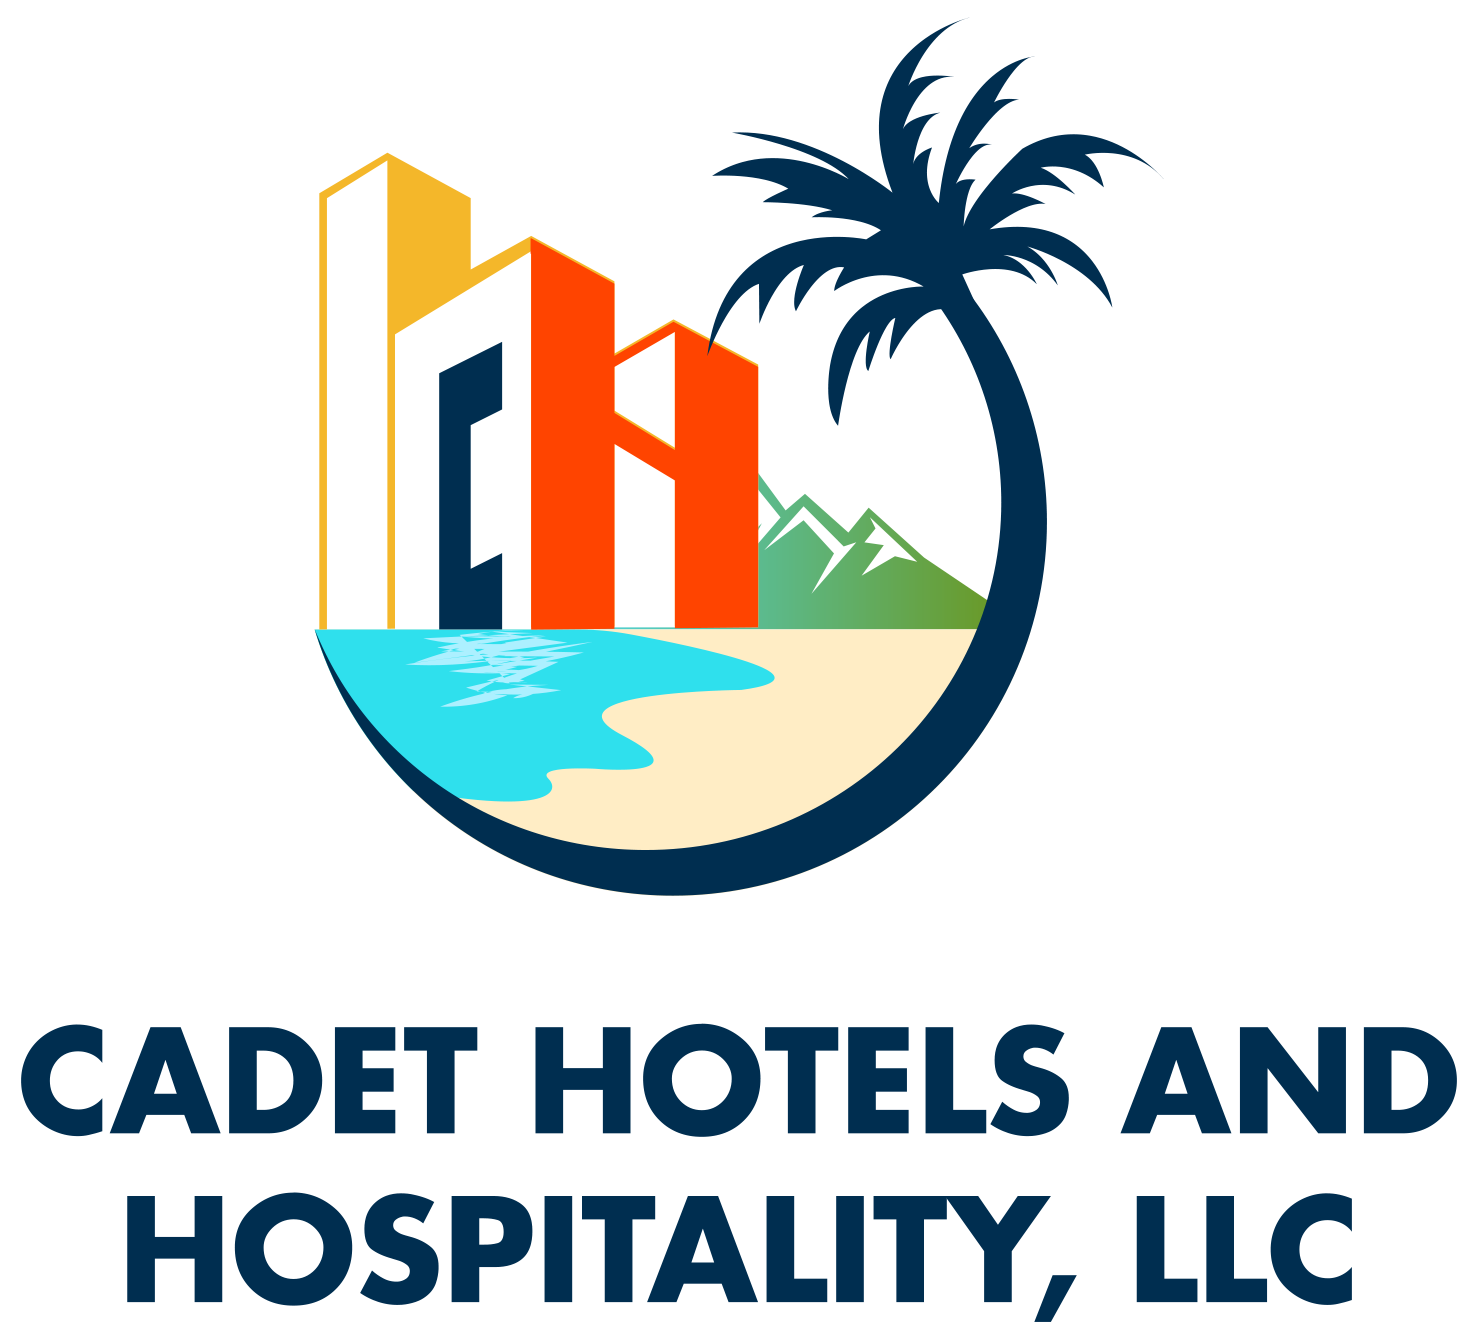 Cadet Hotels and Hospitality, LLC